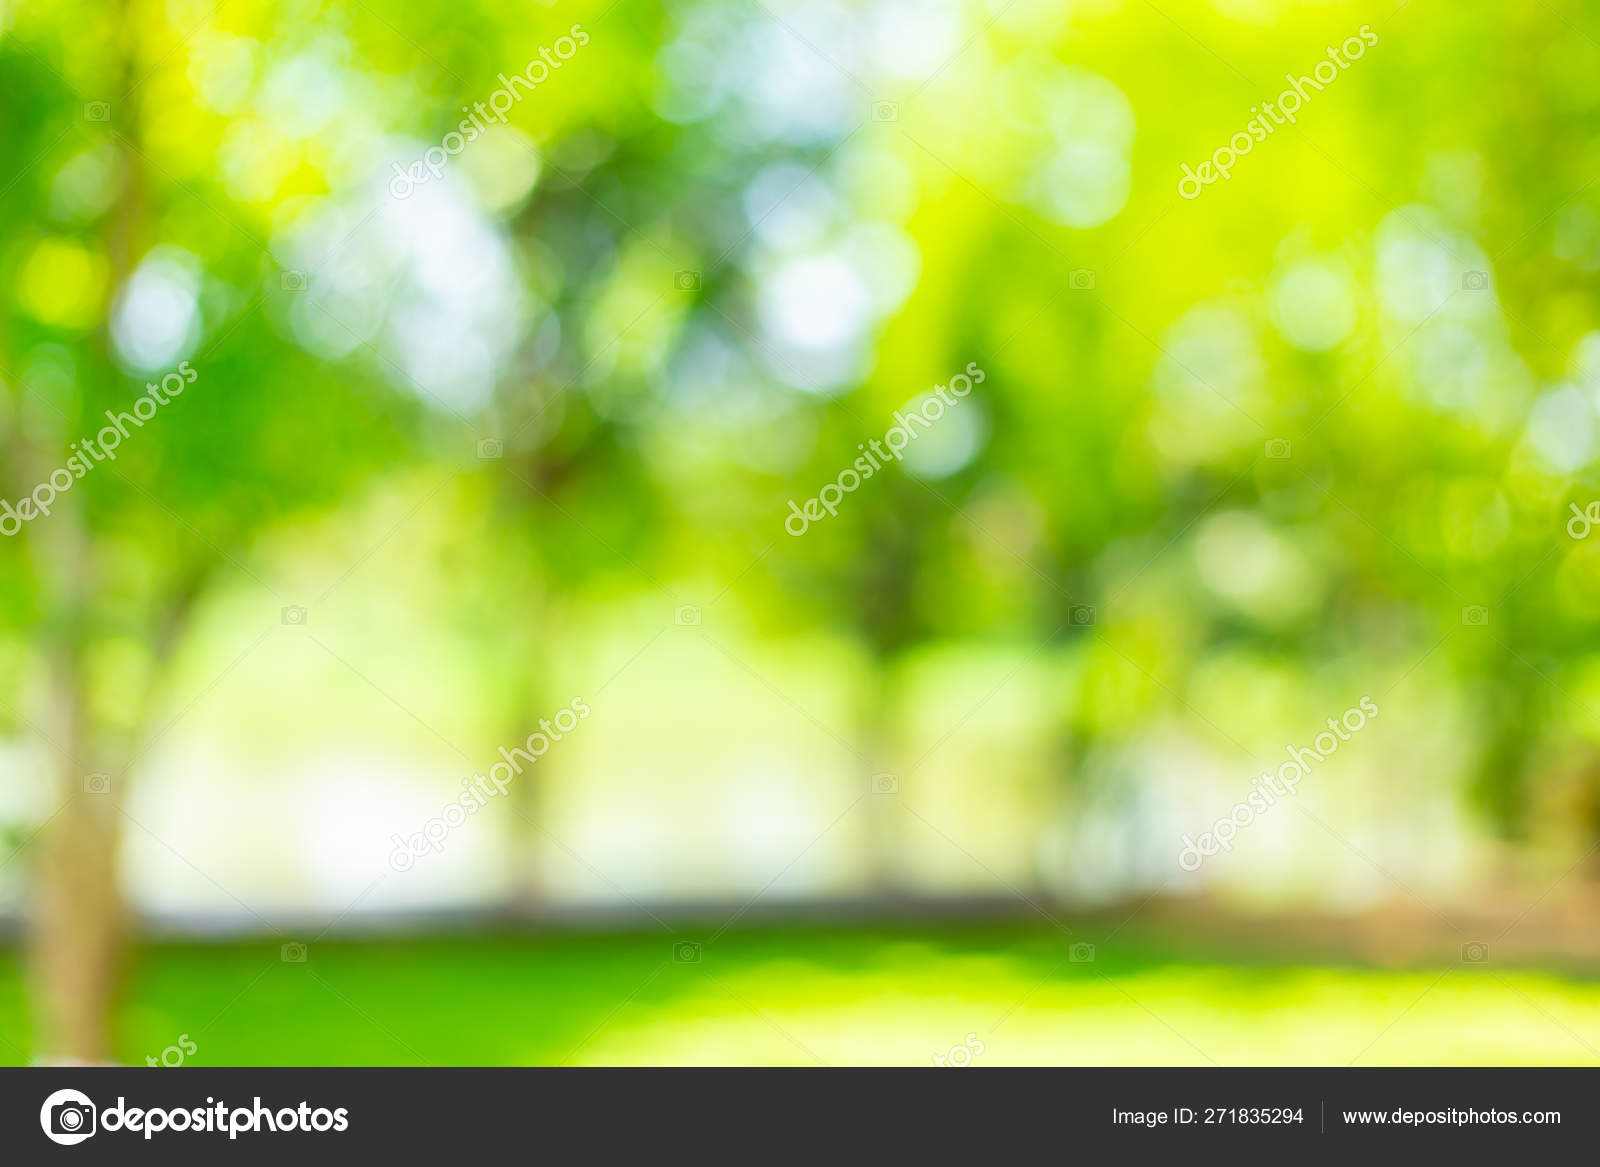 Blur Green Tree Outdoor Park Garden Abstract Background Stock ...